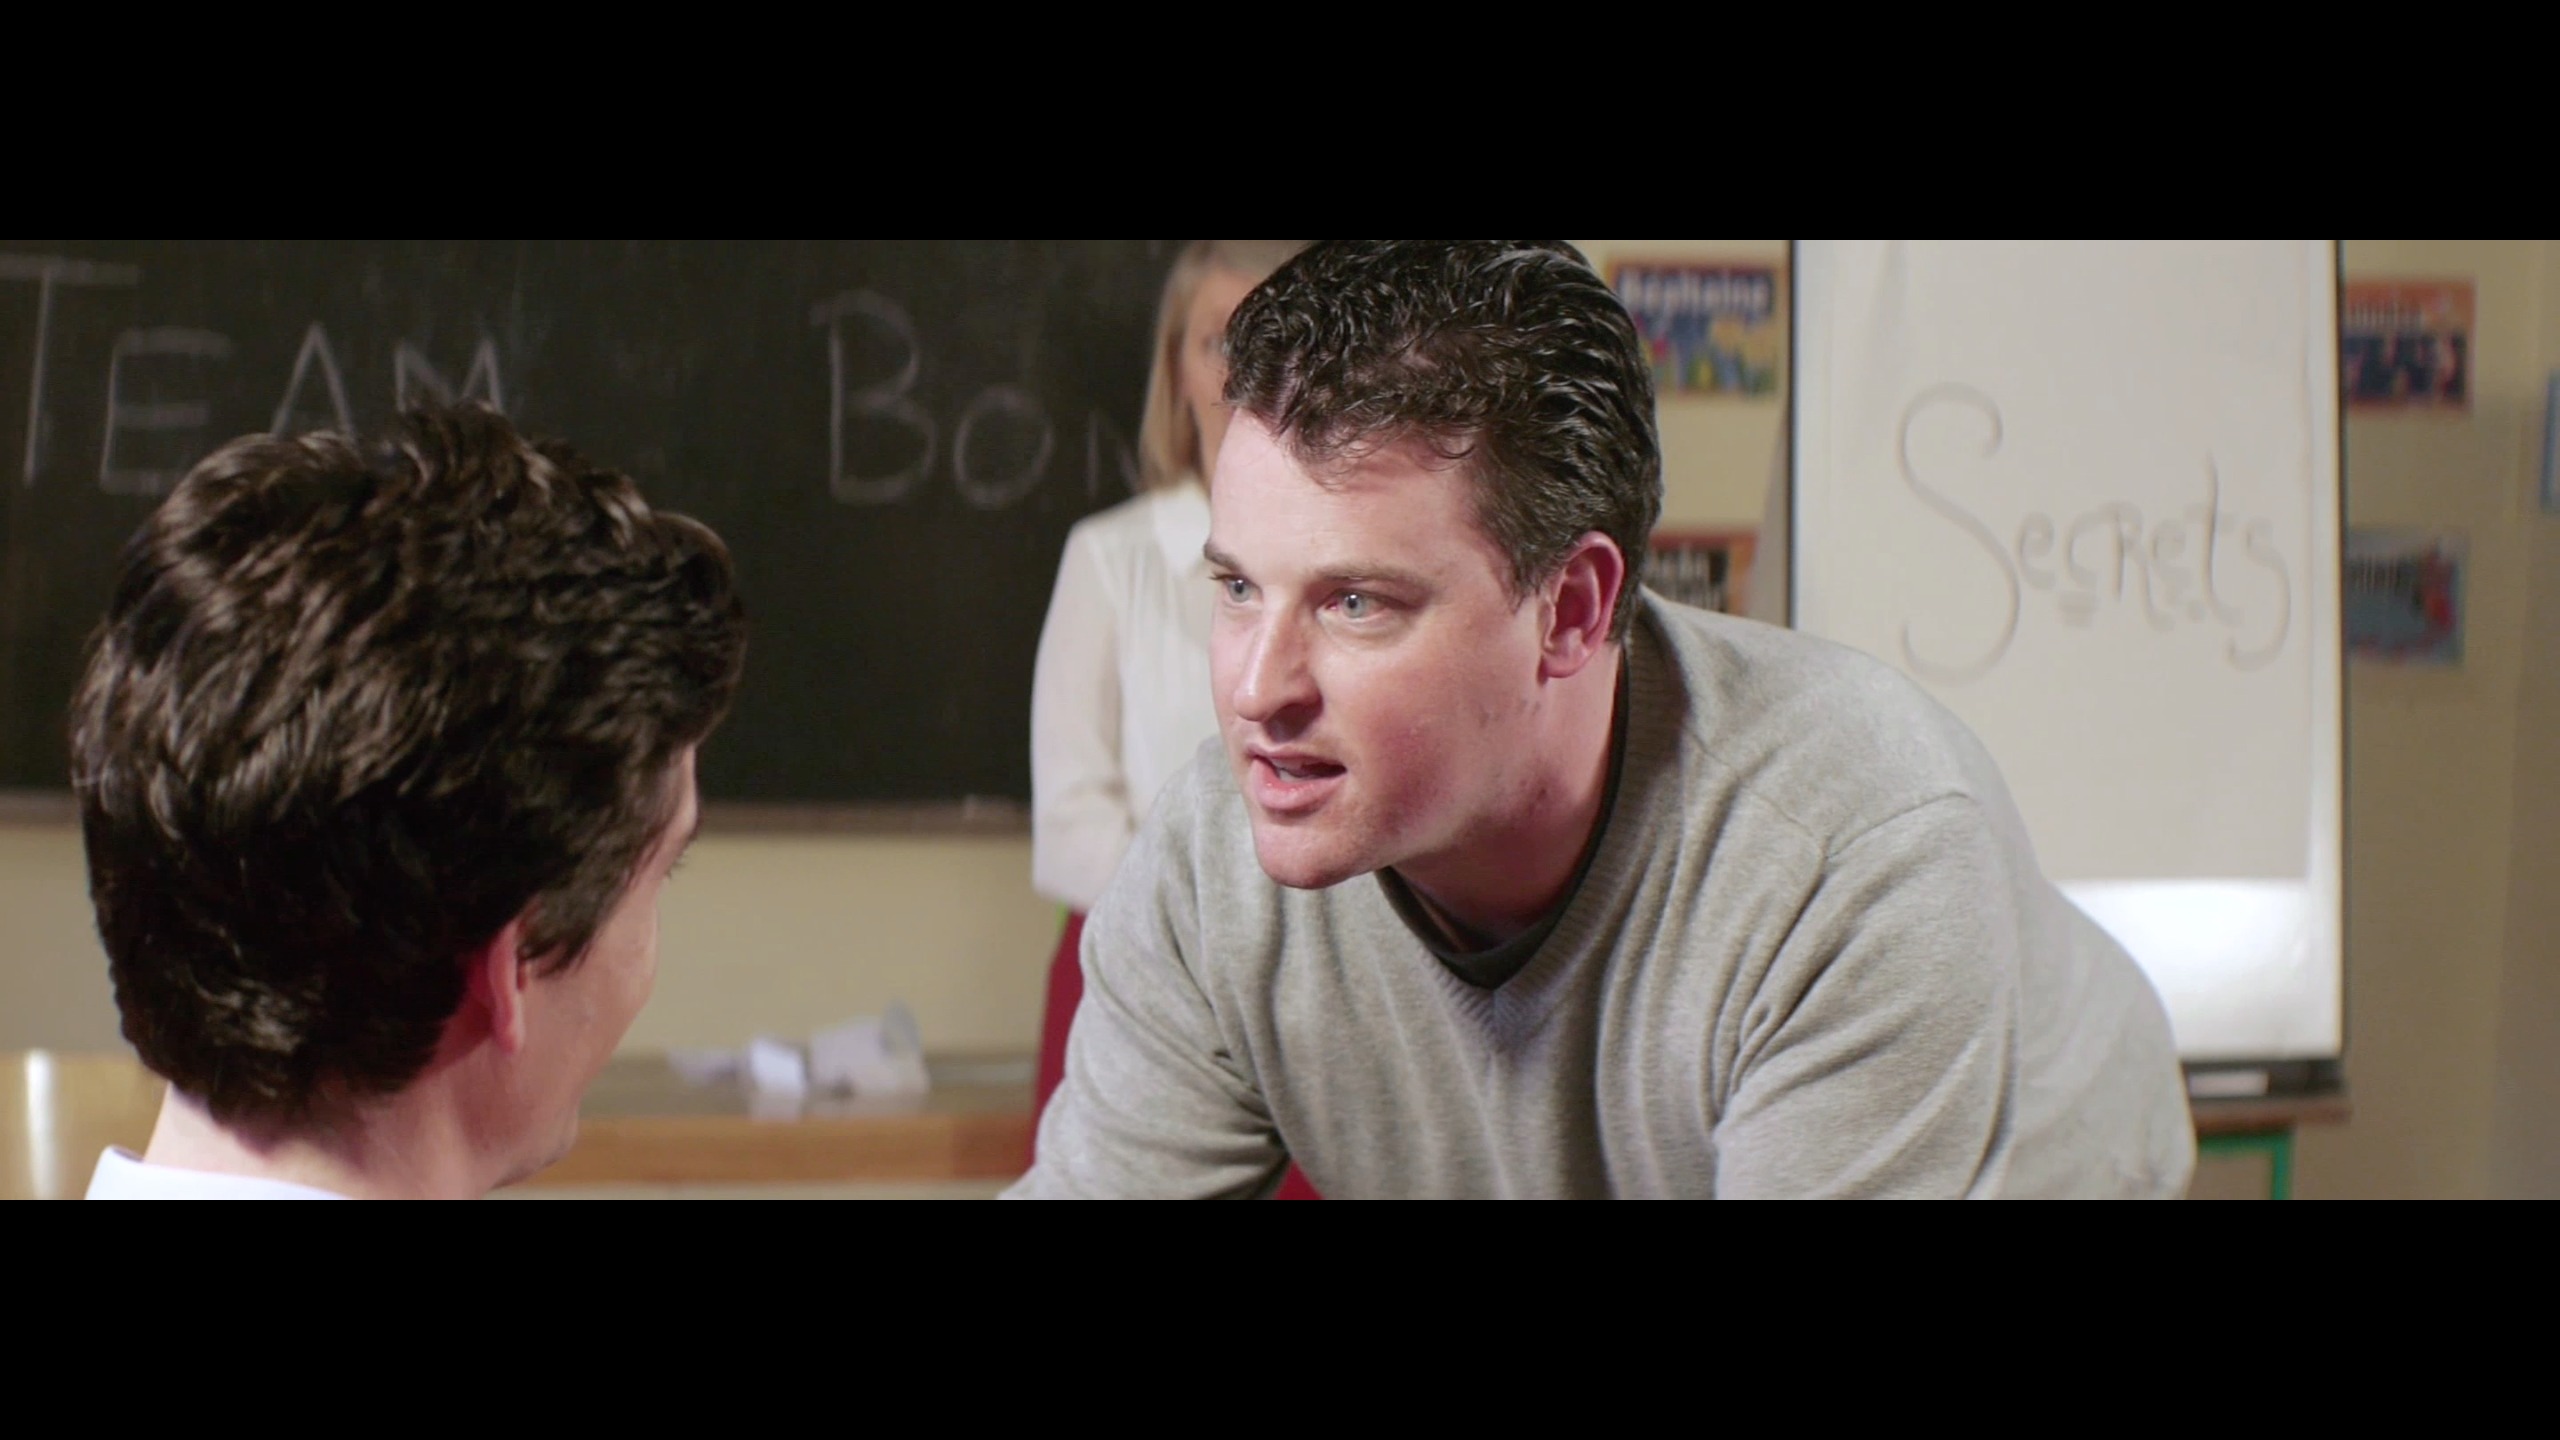 Declan Reynolds as testosterone filled PE Teacher LLOYD in SENIOR INFANTS (2014). View film here: https://vimeo.com/100951176